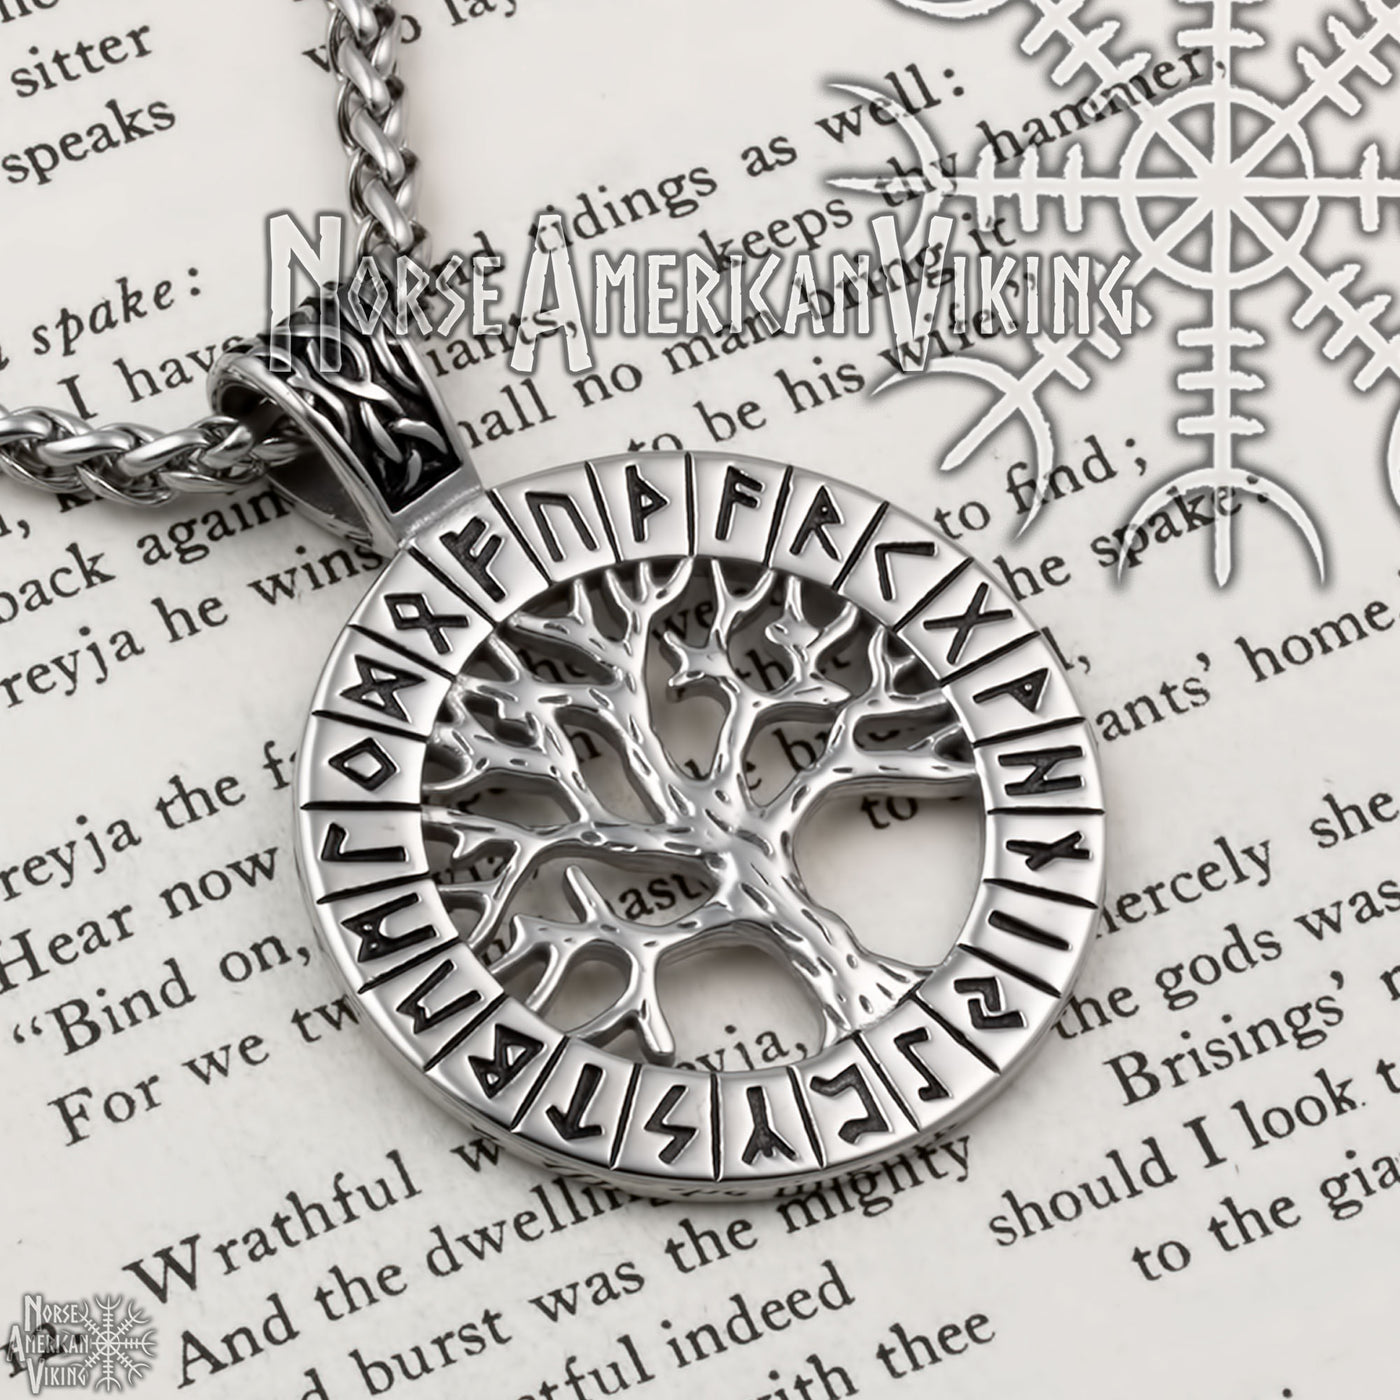 Viking Yggdrasil World Tree Rune Stainless Steel Pendant Necklace